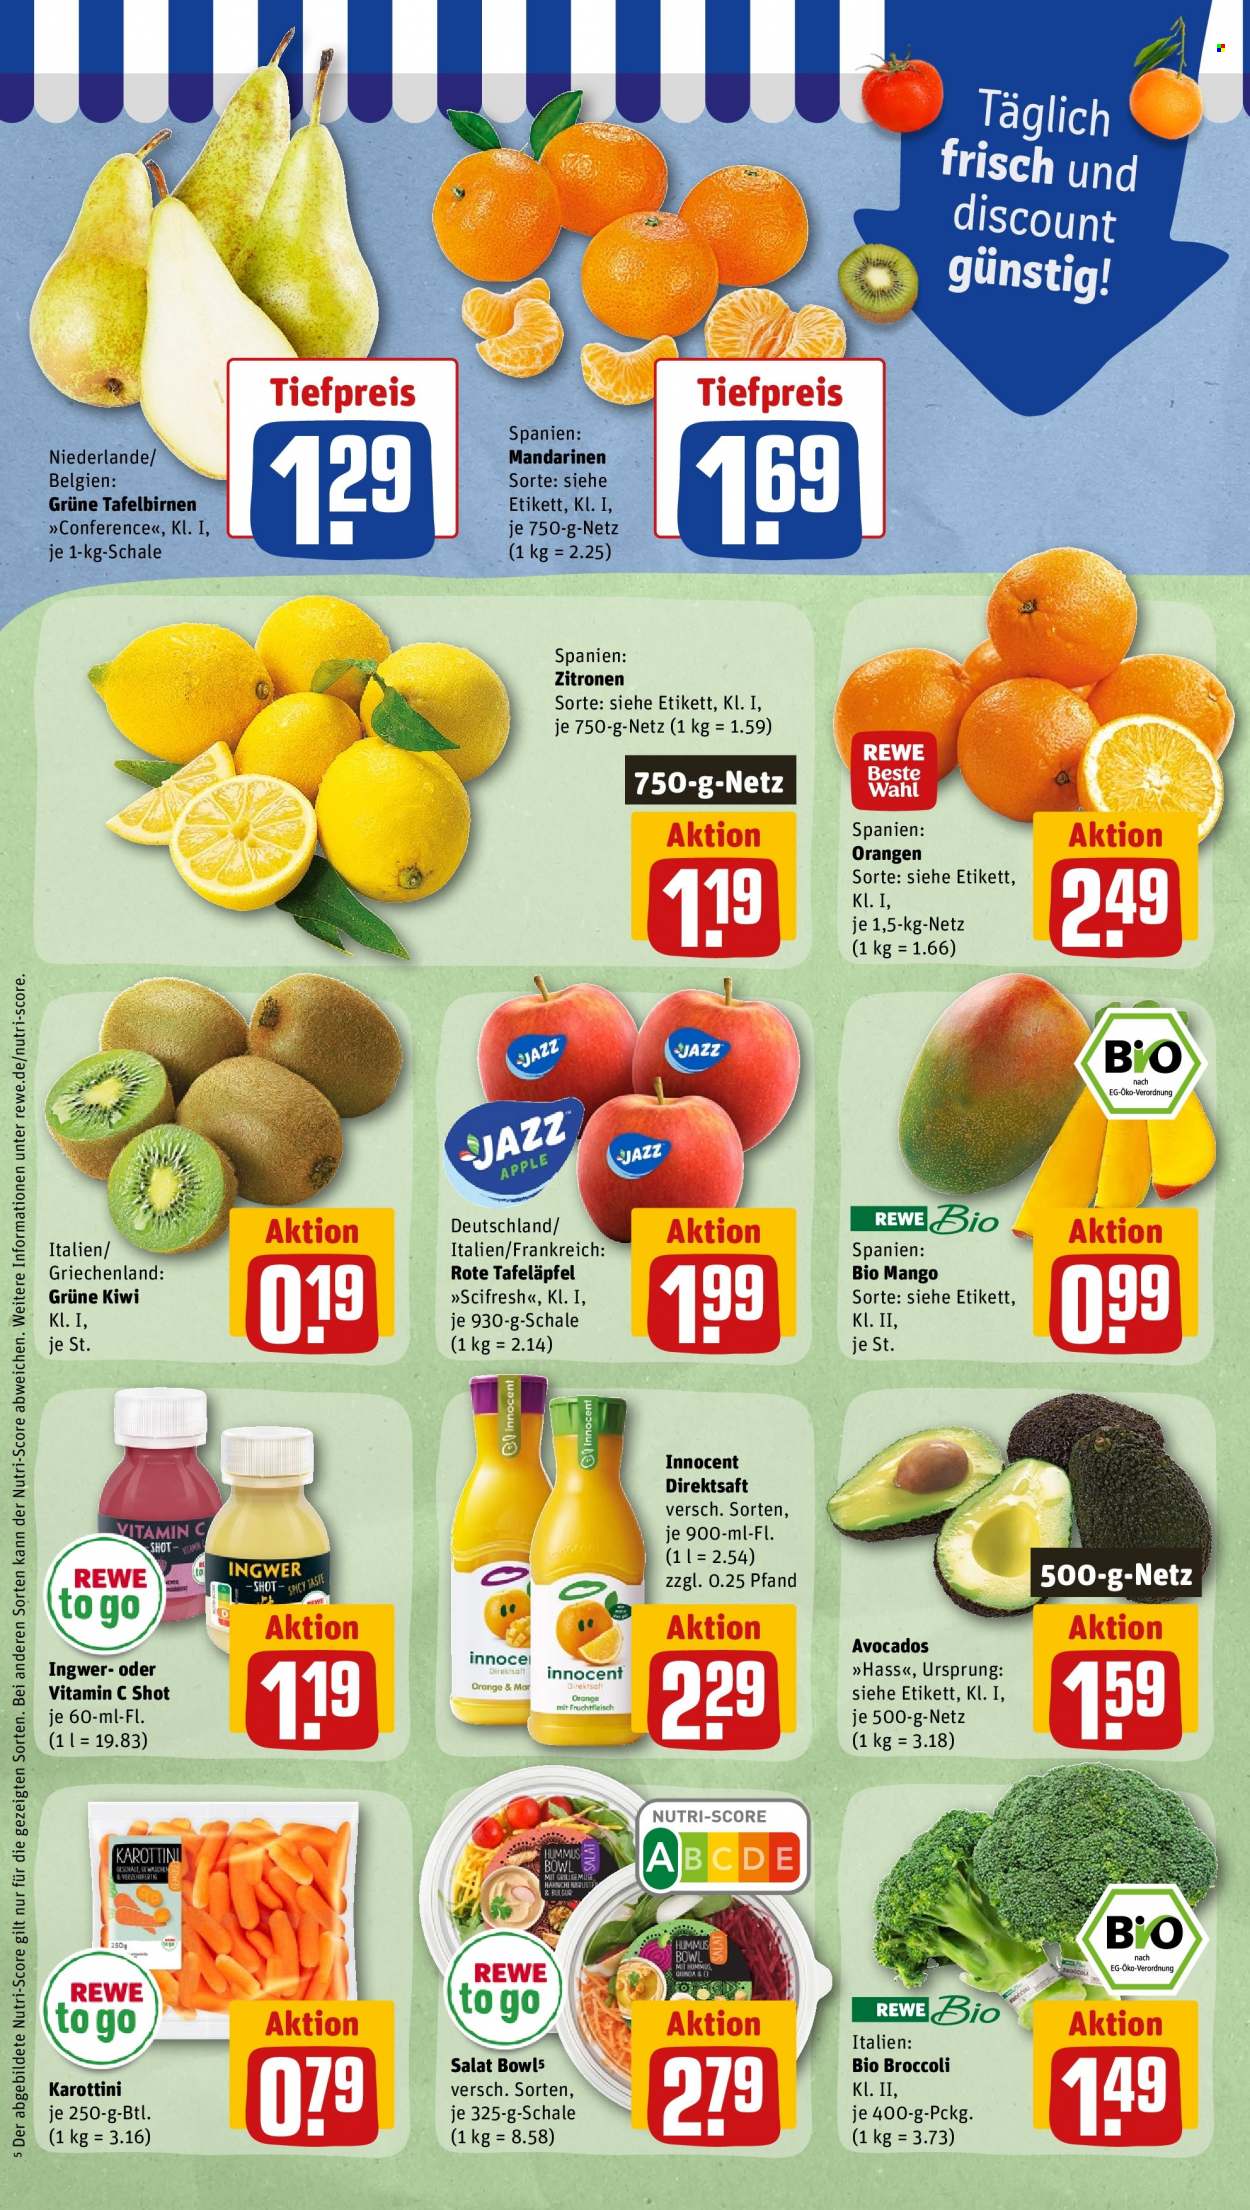 thumbnail - REWE tilbud  - 30.1.2023 - 4.2.2023 - tilbudsprodukter - kiwi, mango, broccoli, salat. Side 6.